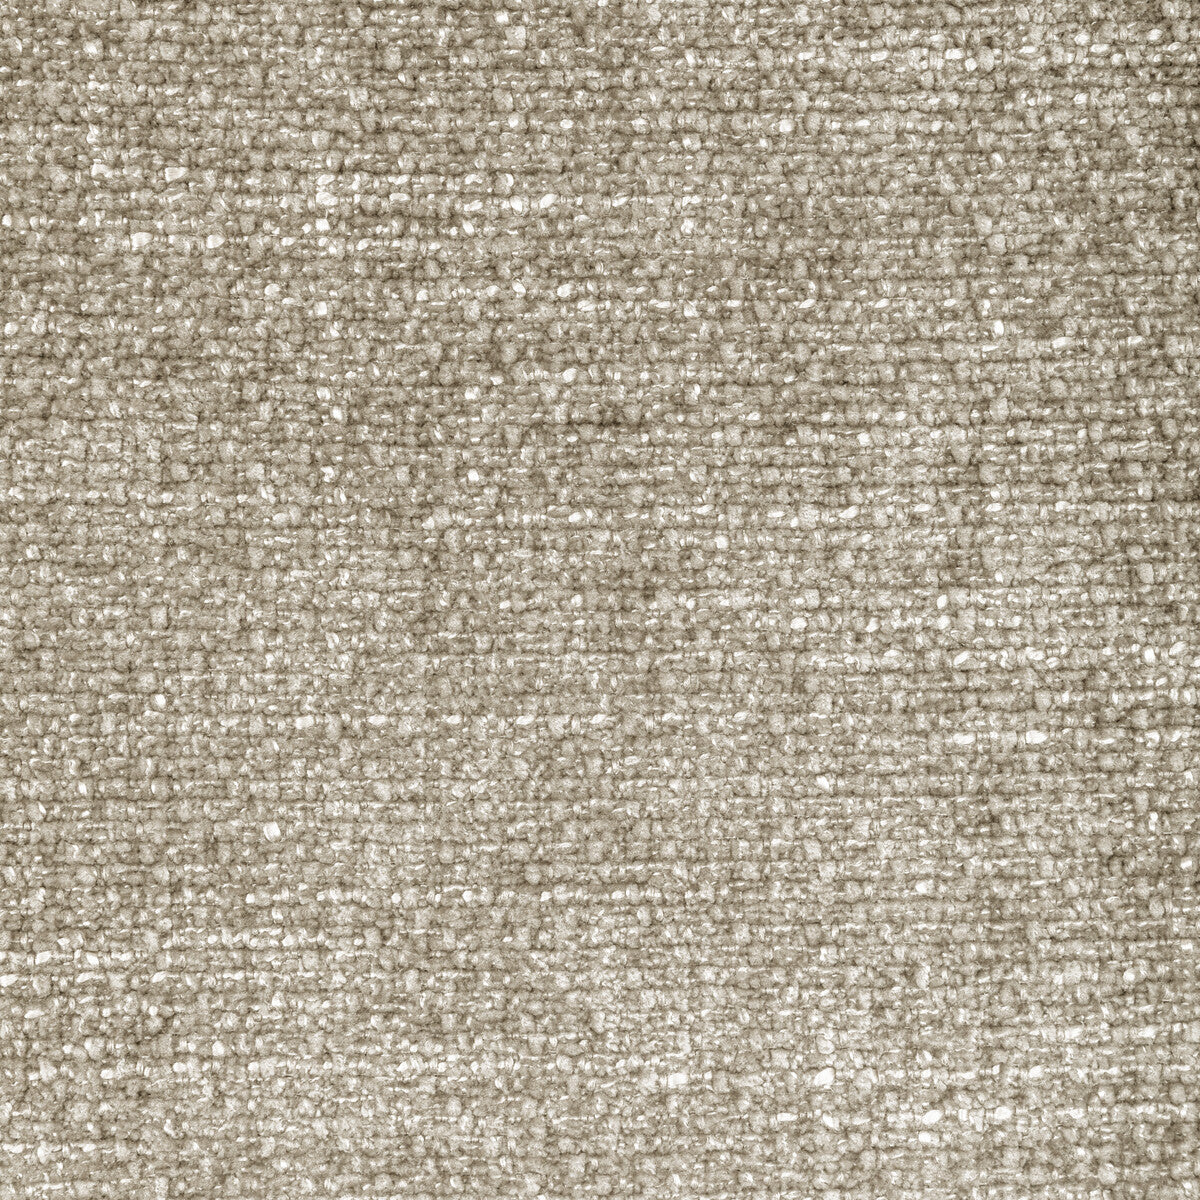 Kravet Smart fabric in 36578-121 color - pattern 36578.121.0 - by Kravet Smart in the Performance Kravetarmor collection